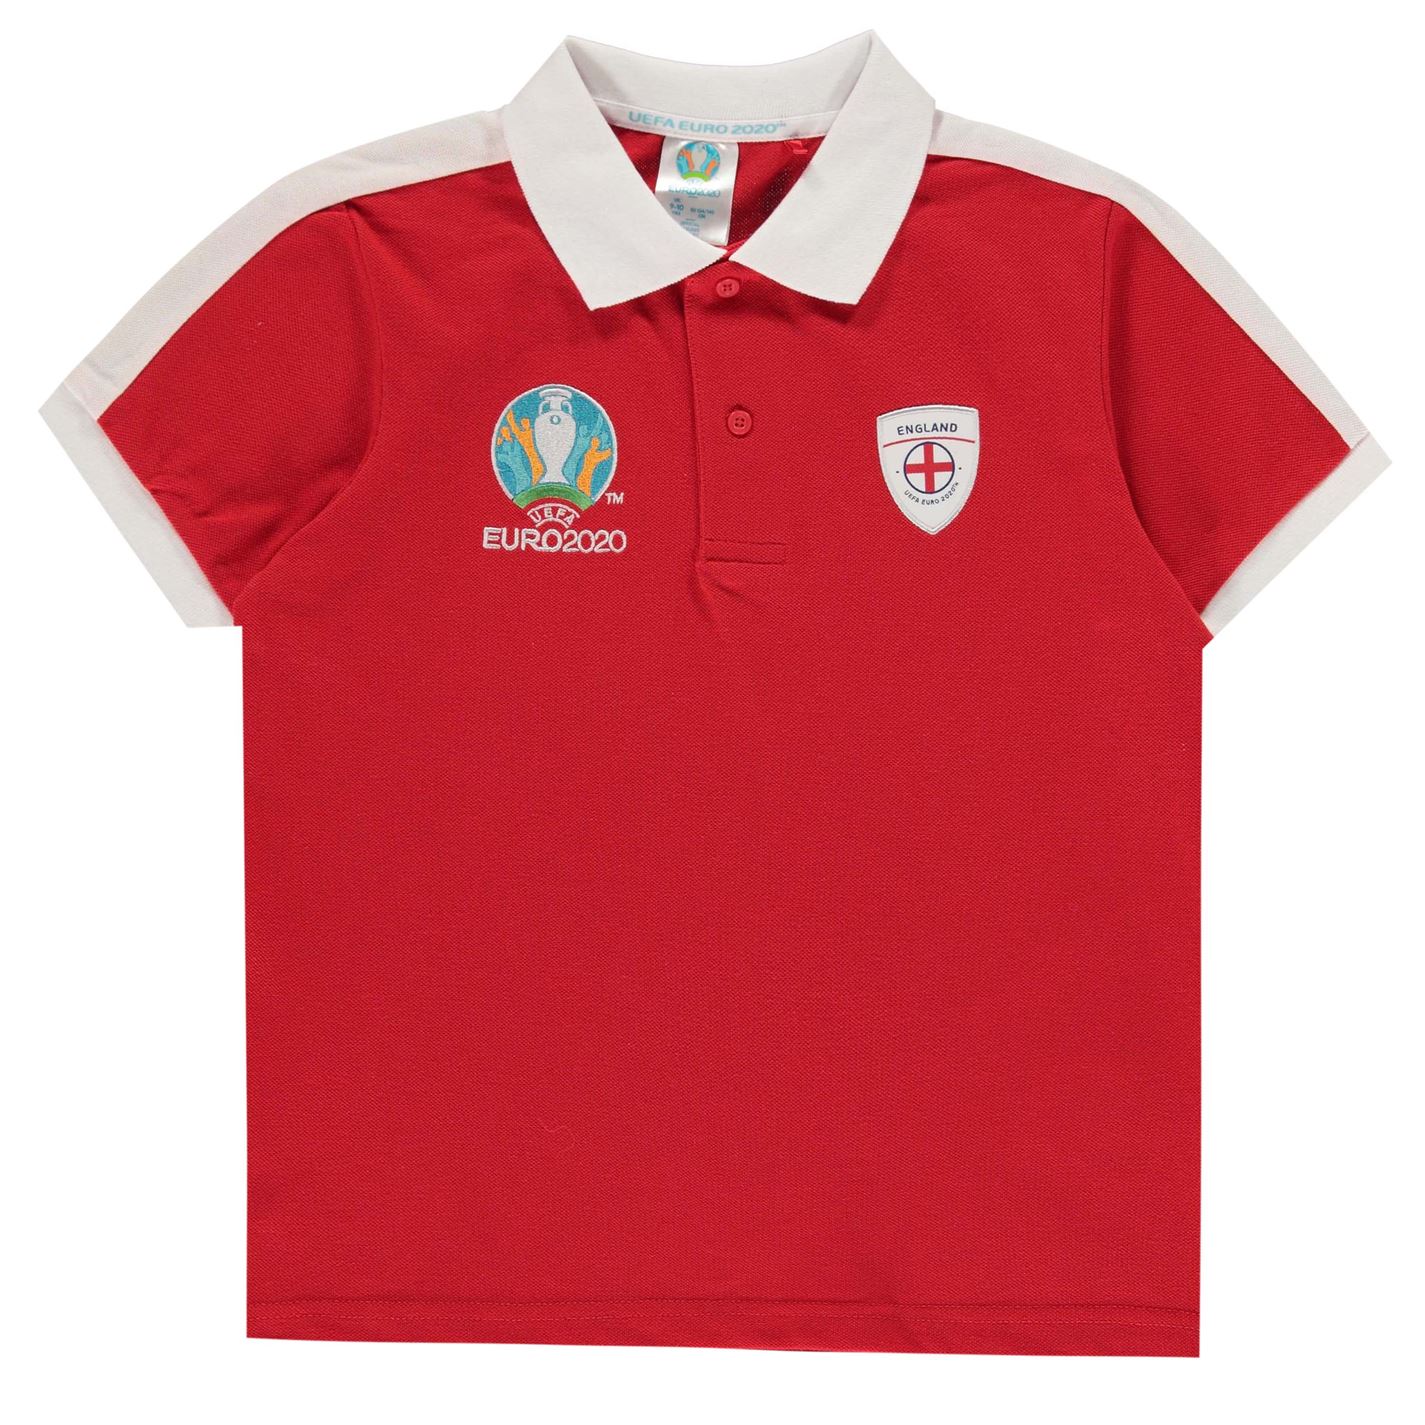 Tricouri Polo UEFA Euro 2020 Anglia pentru baietei rosu